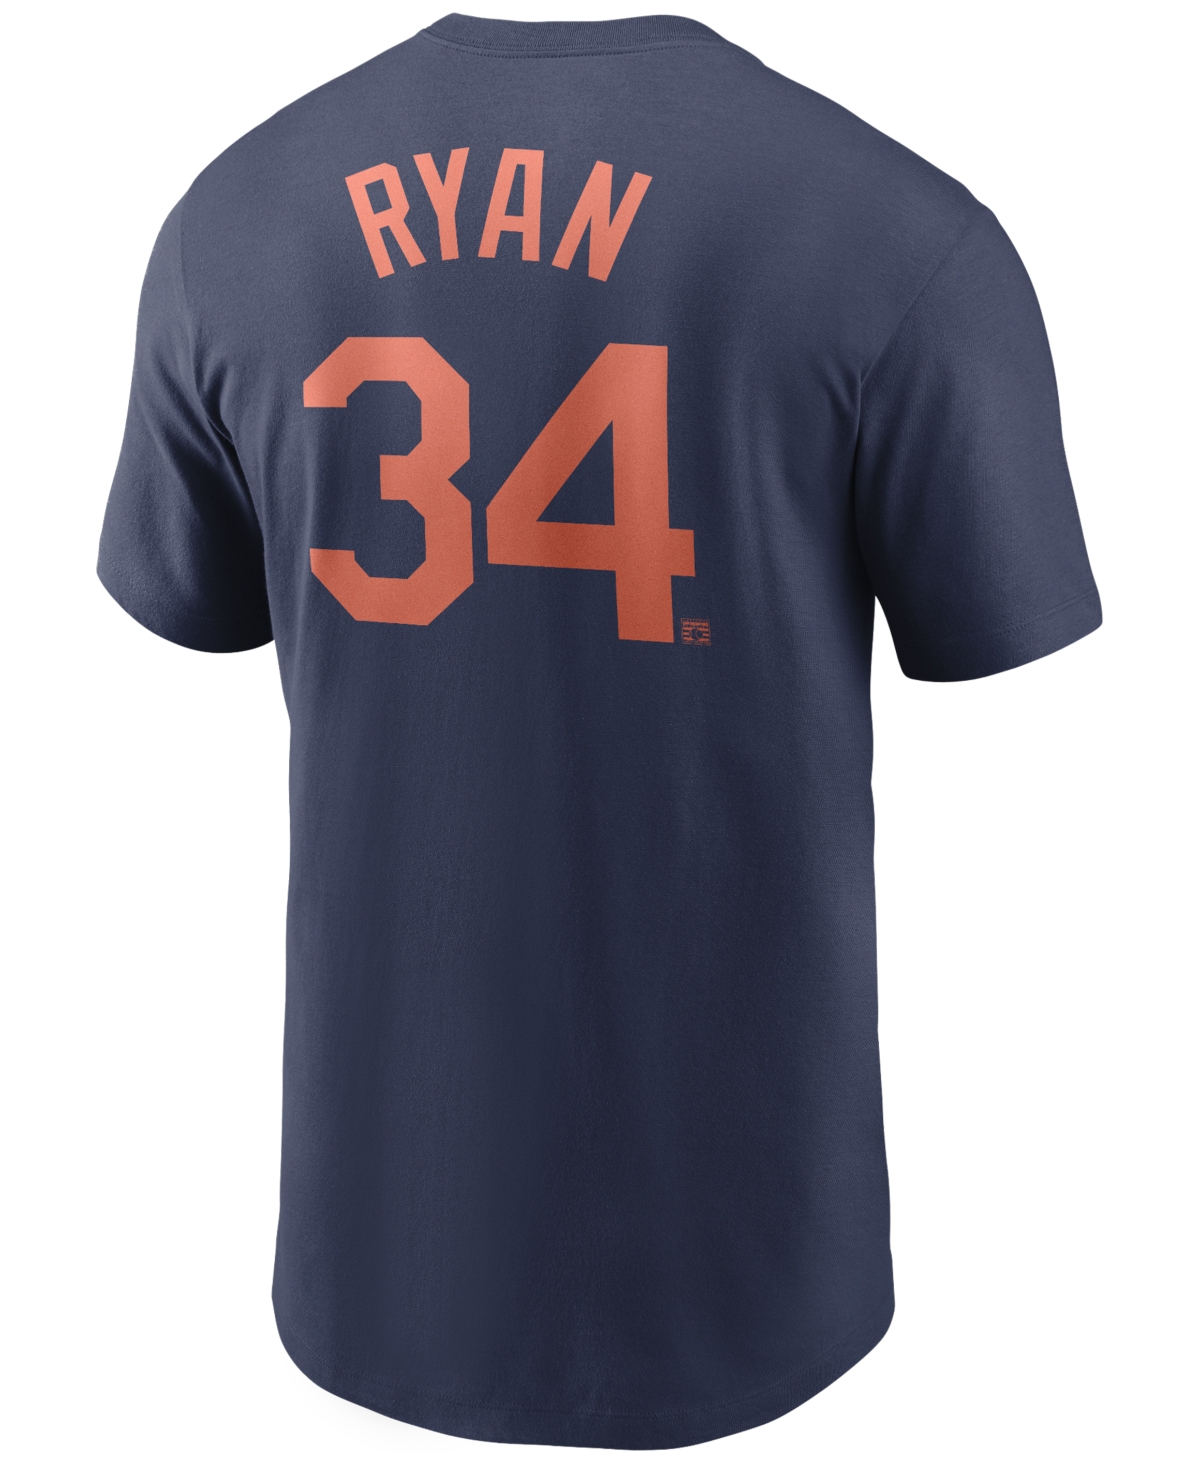 Nike Houston Astros Men's Coop Nolan Ryan Name and Number Player T-Shirt